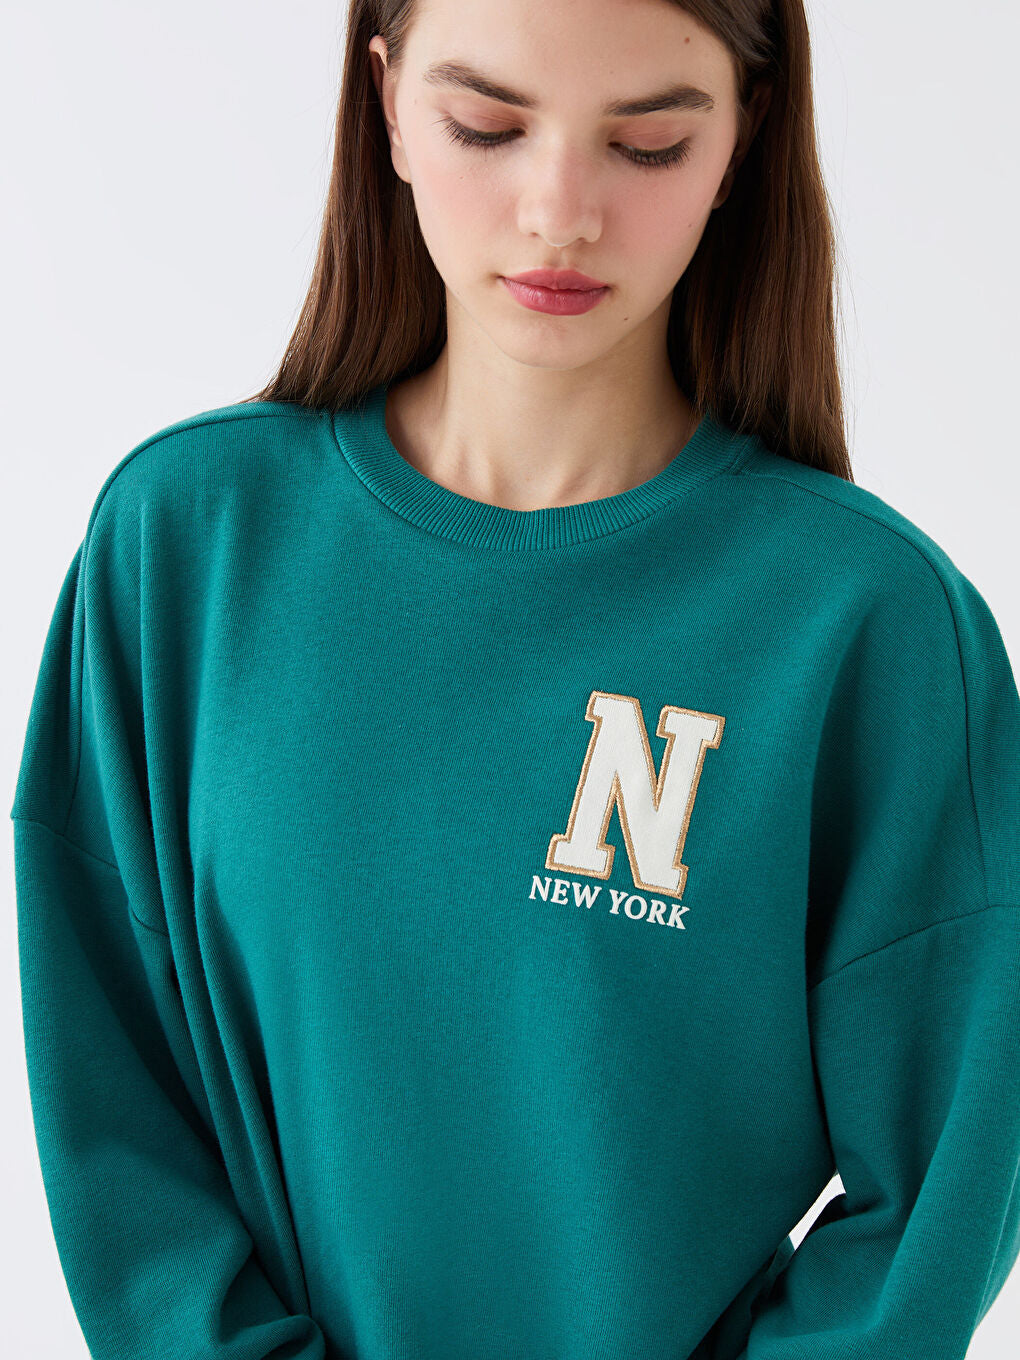 Crew Neck Printed Long Sleeve Oversize Women Sweatshirt